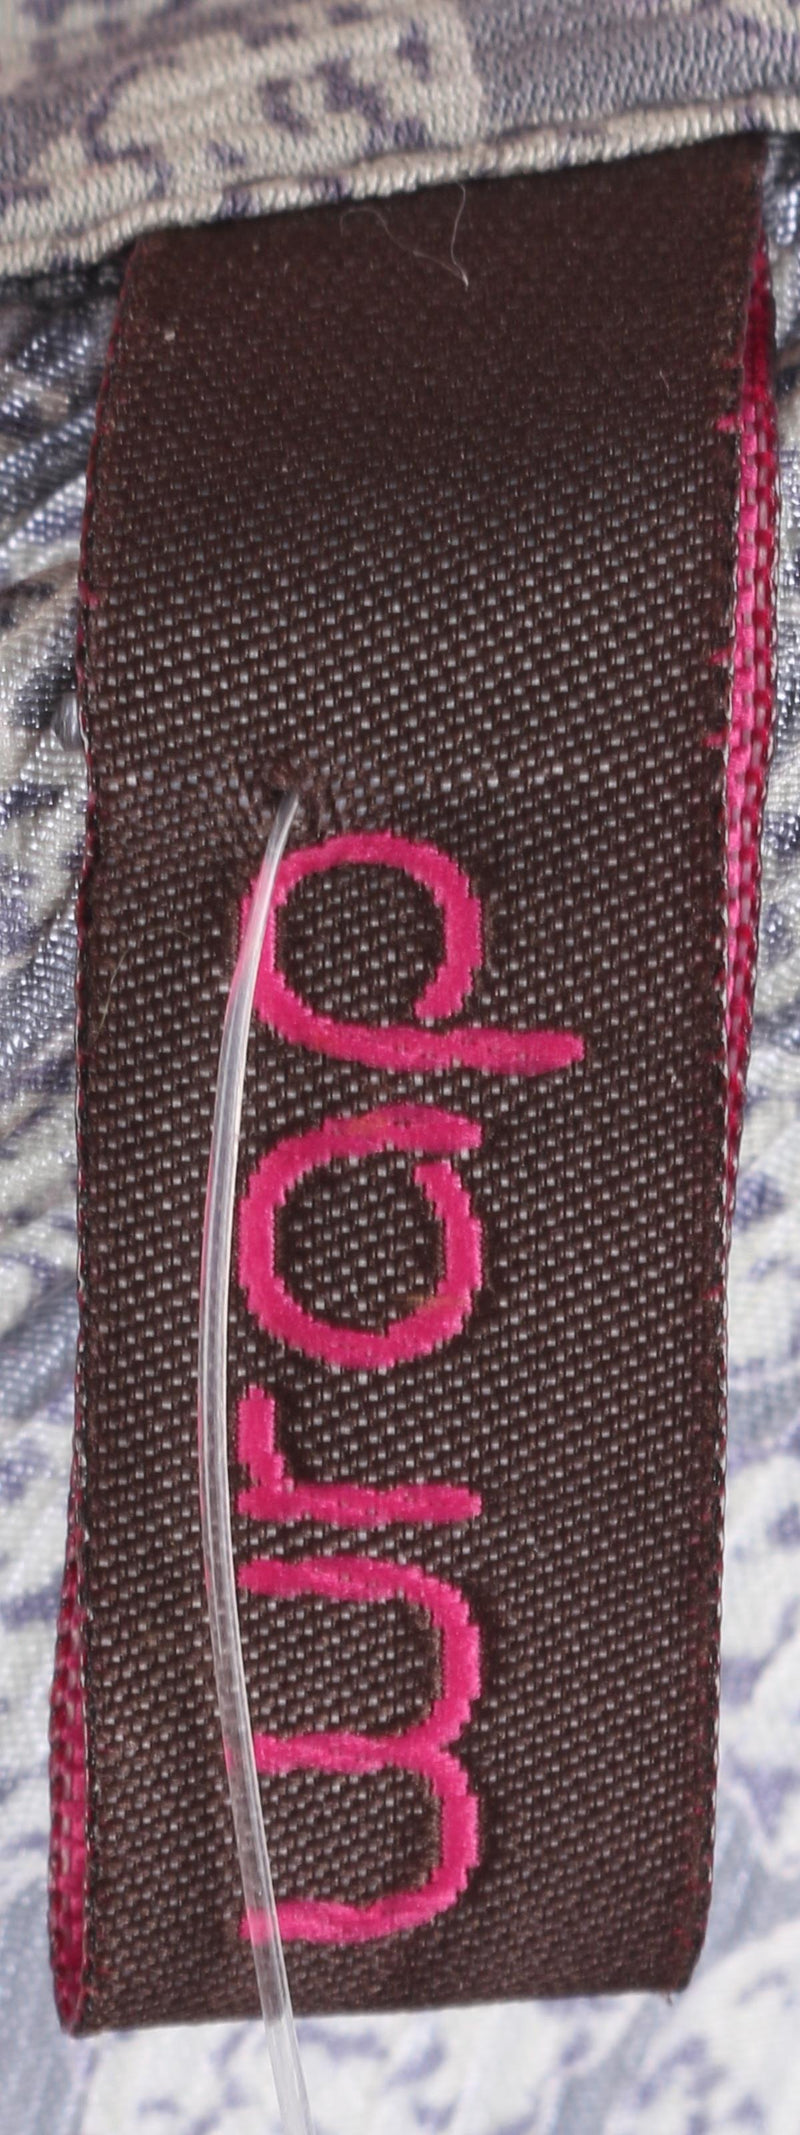 Wrap Tunic Top with Crystal Belt Silk Grey Pattern UK Size 12 - Ava & Iva